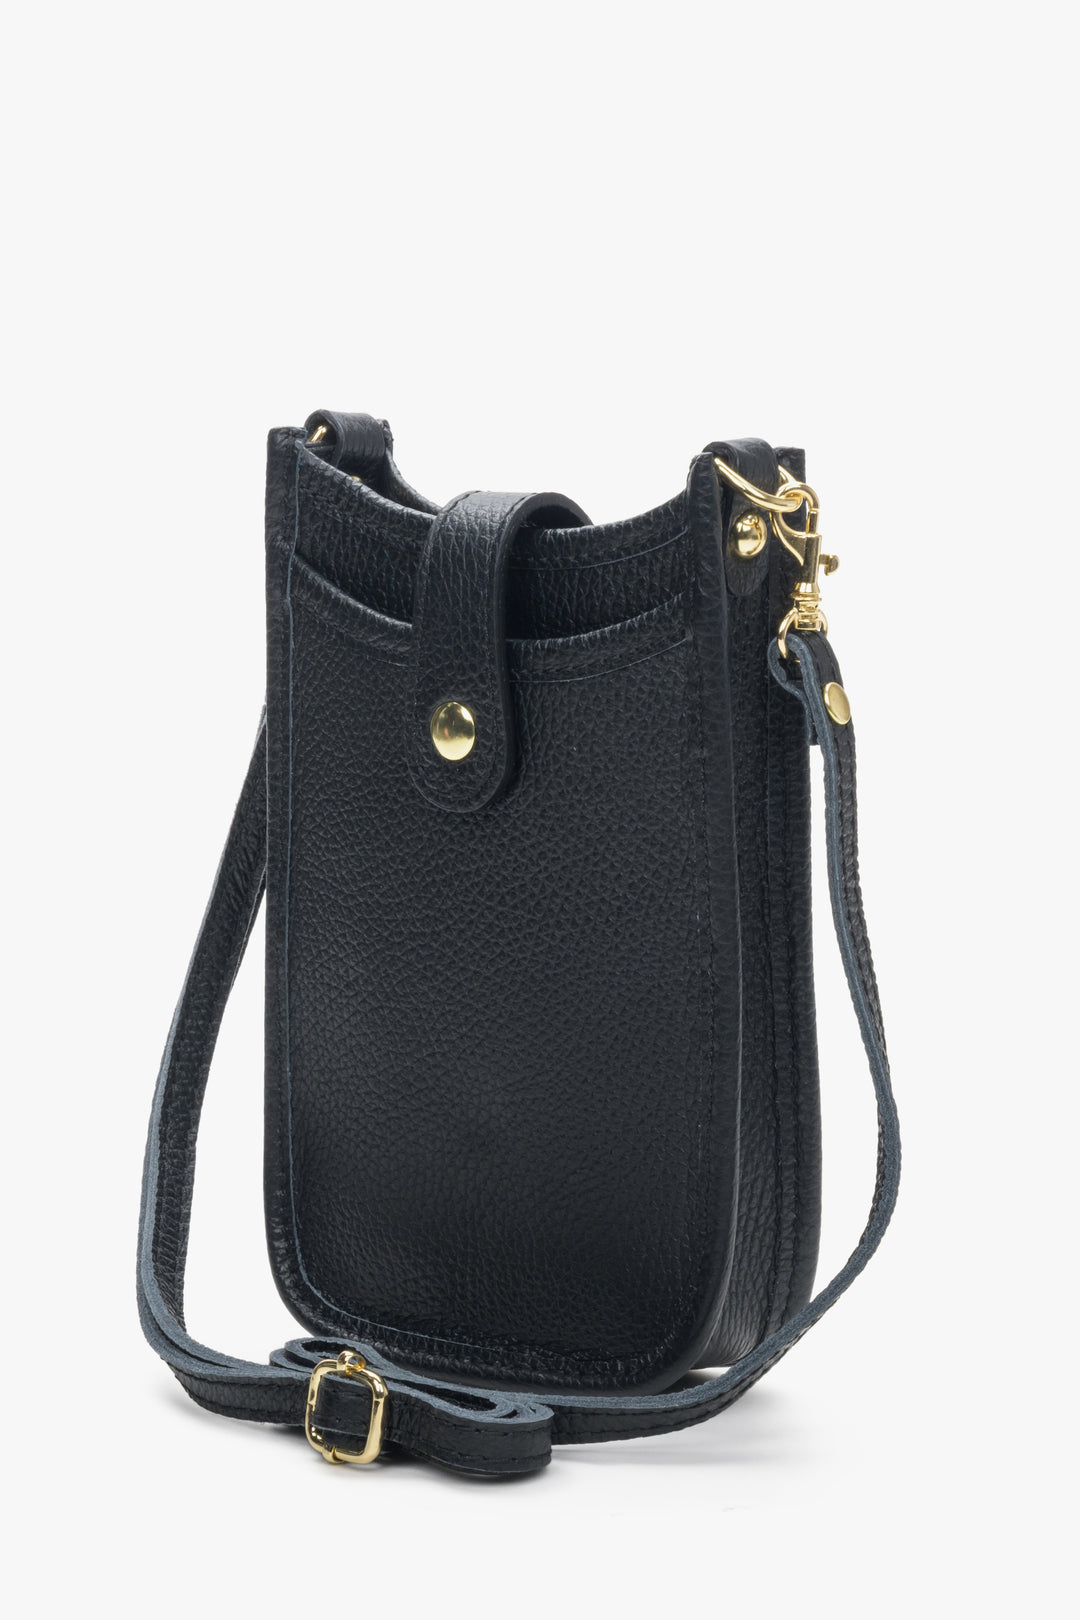 Women's black leather  smartphone purse.